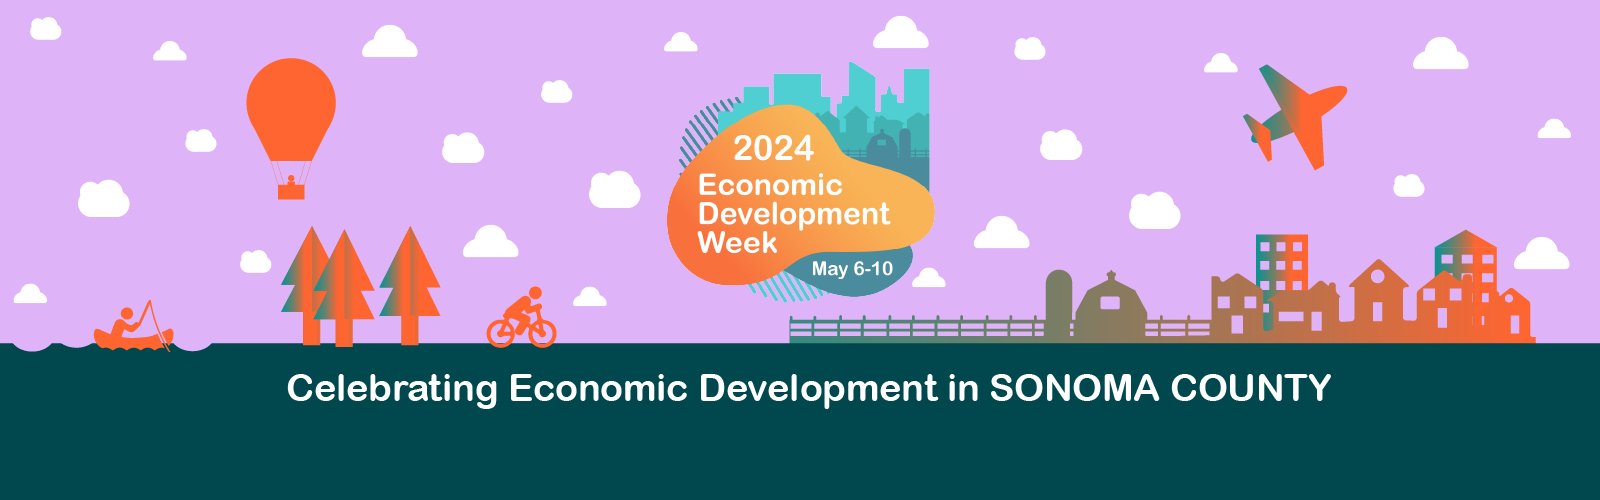 2024 Economic Development Week. May 6-10. Celebrating Economic Development in Sonoma County